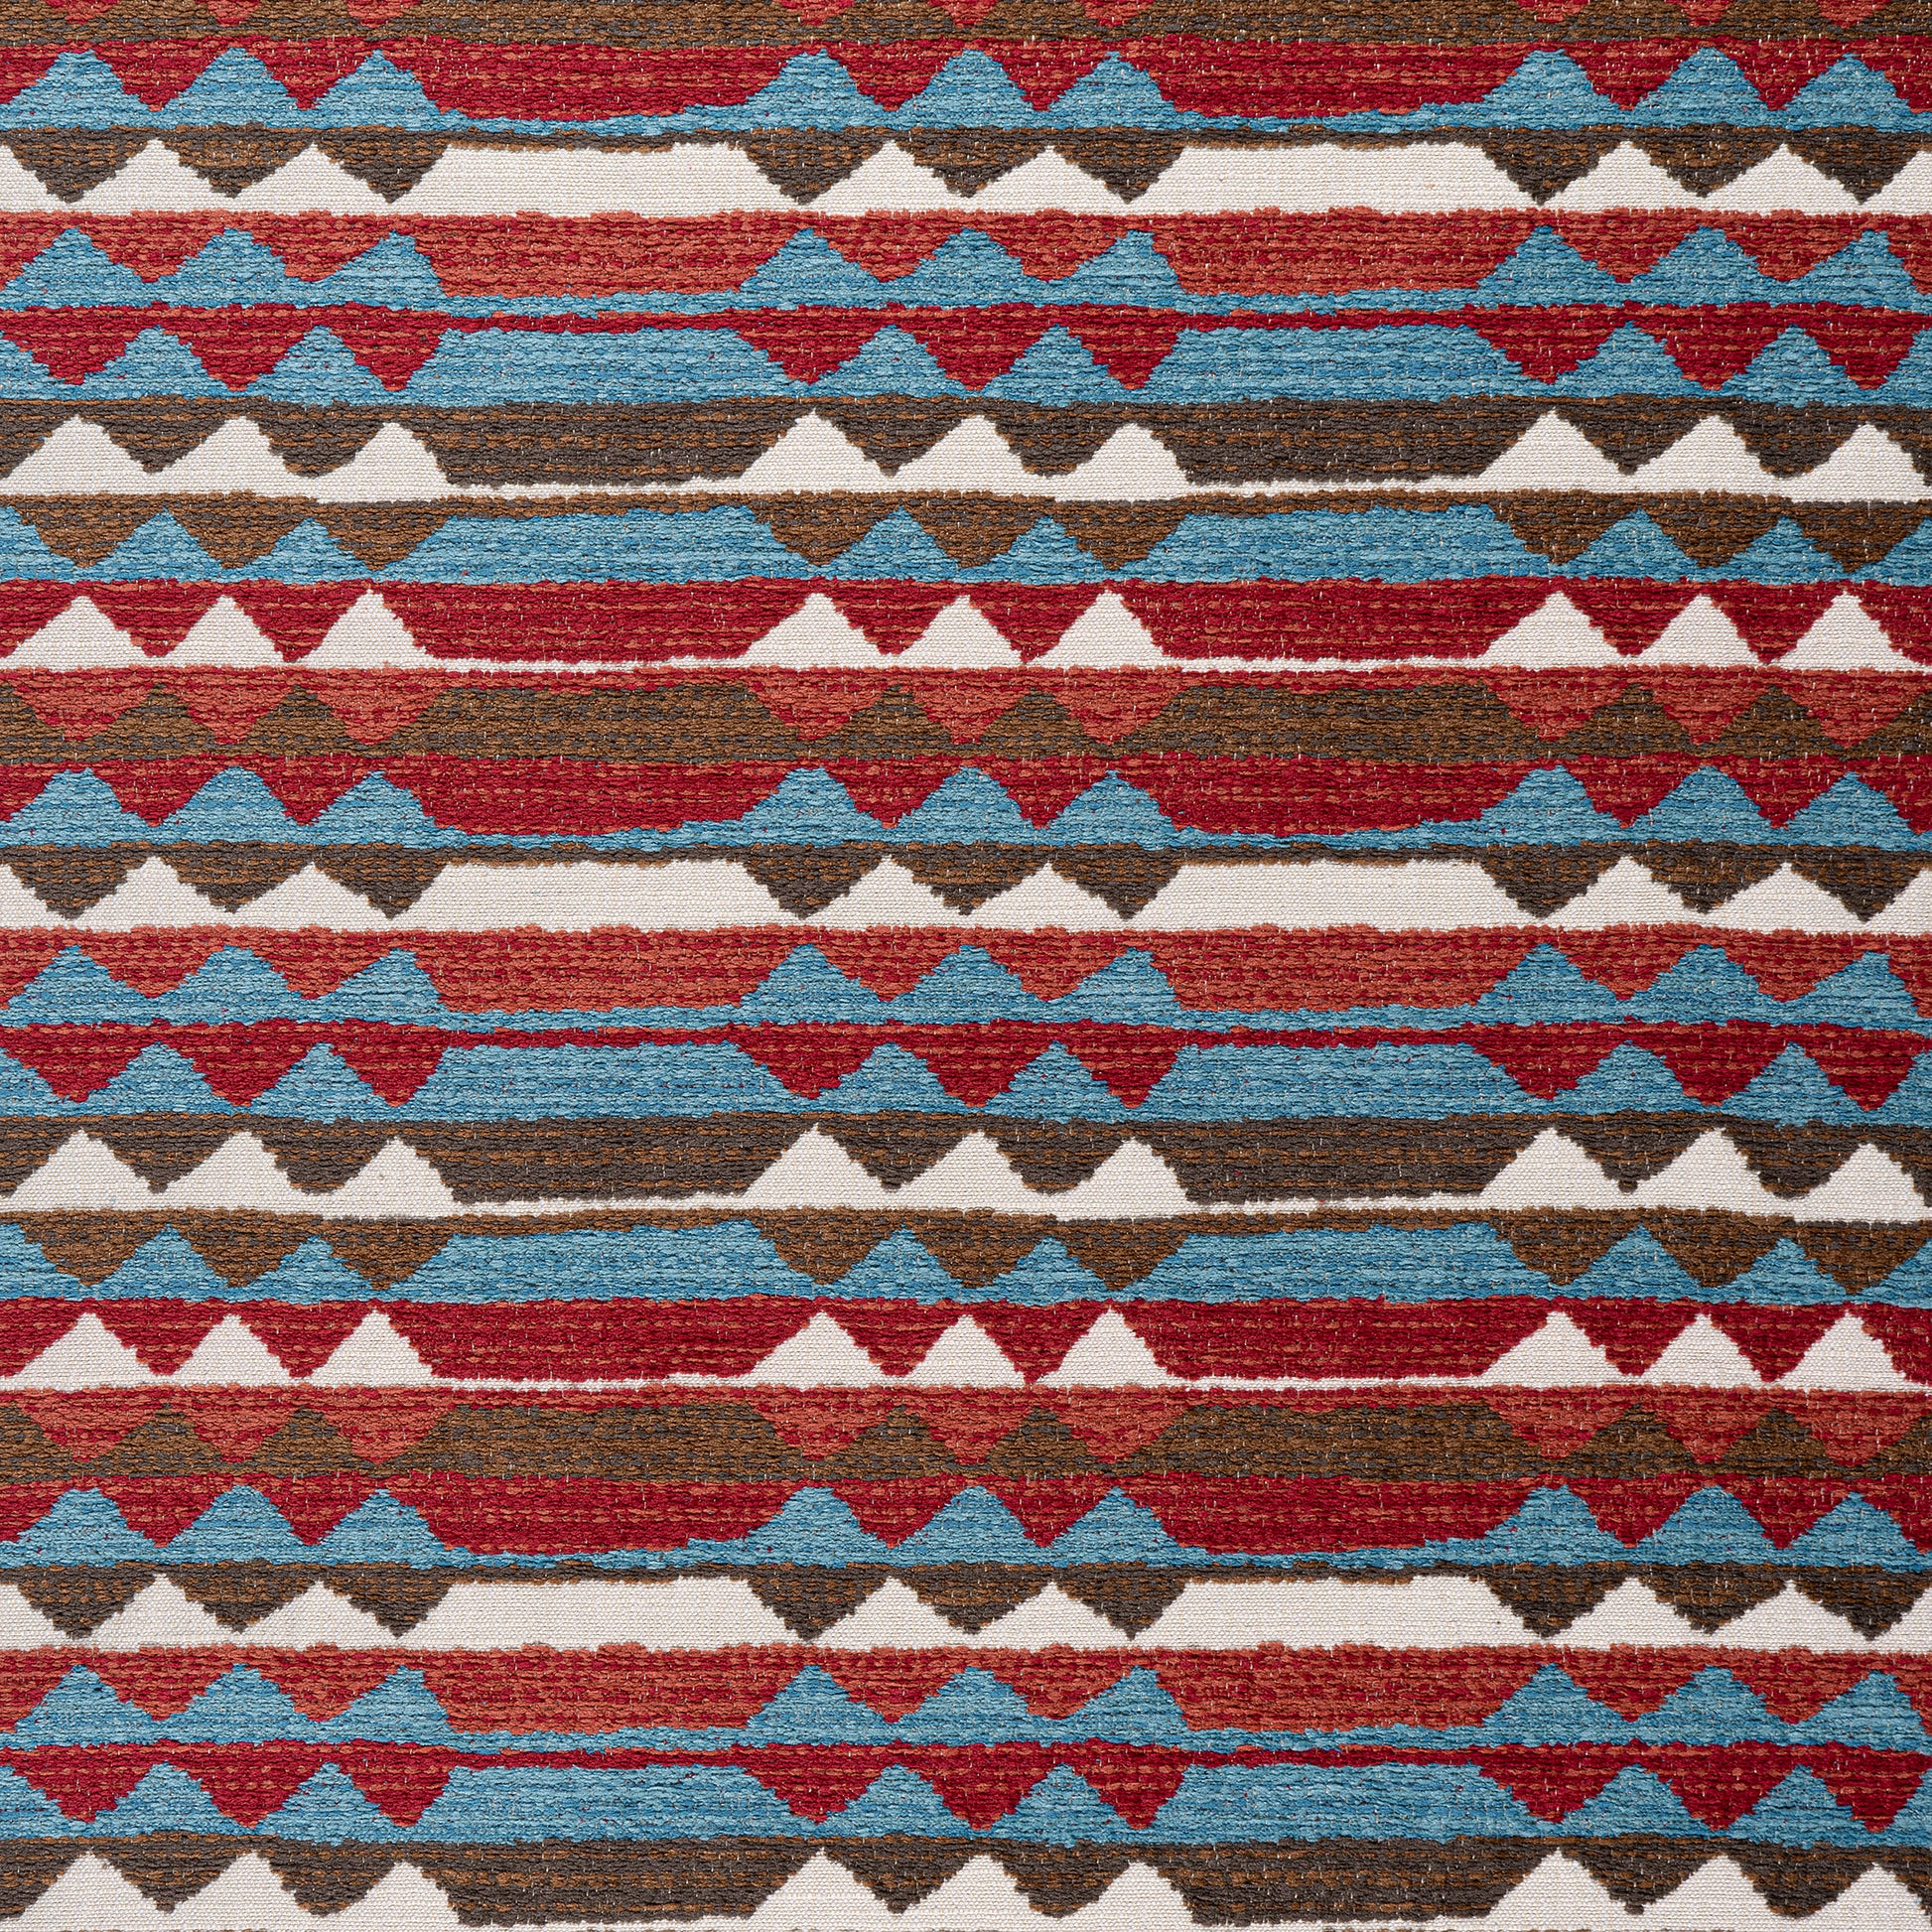 Purchase Thibaut Fabric Pattern# W78379 pattern name Saranac color Redwood